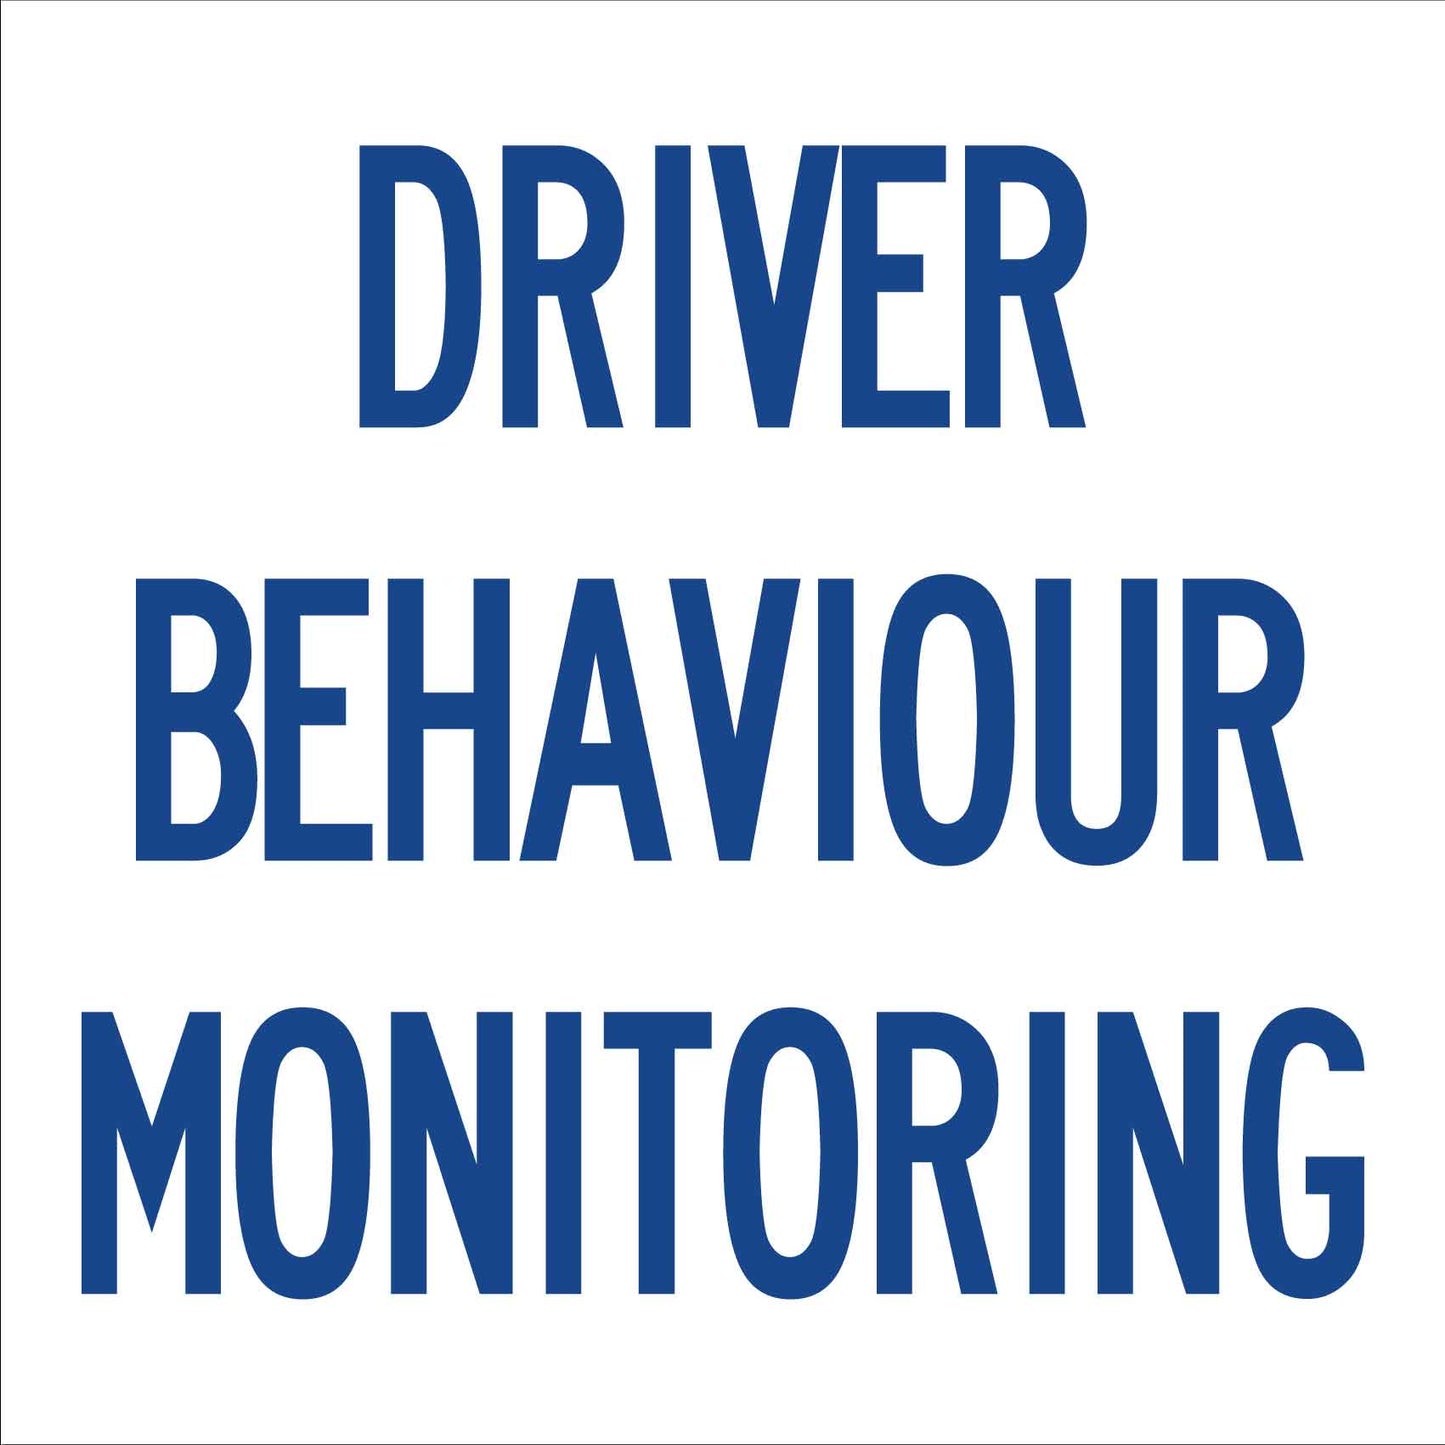 Driver Behaviour Monitoring Multi Message Reflective Traffic Sign